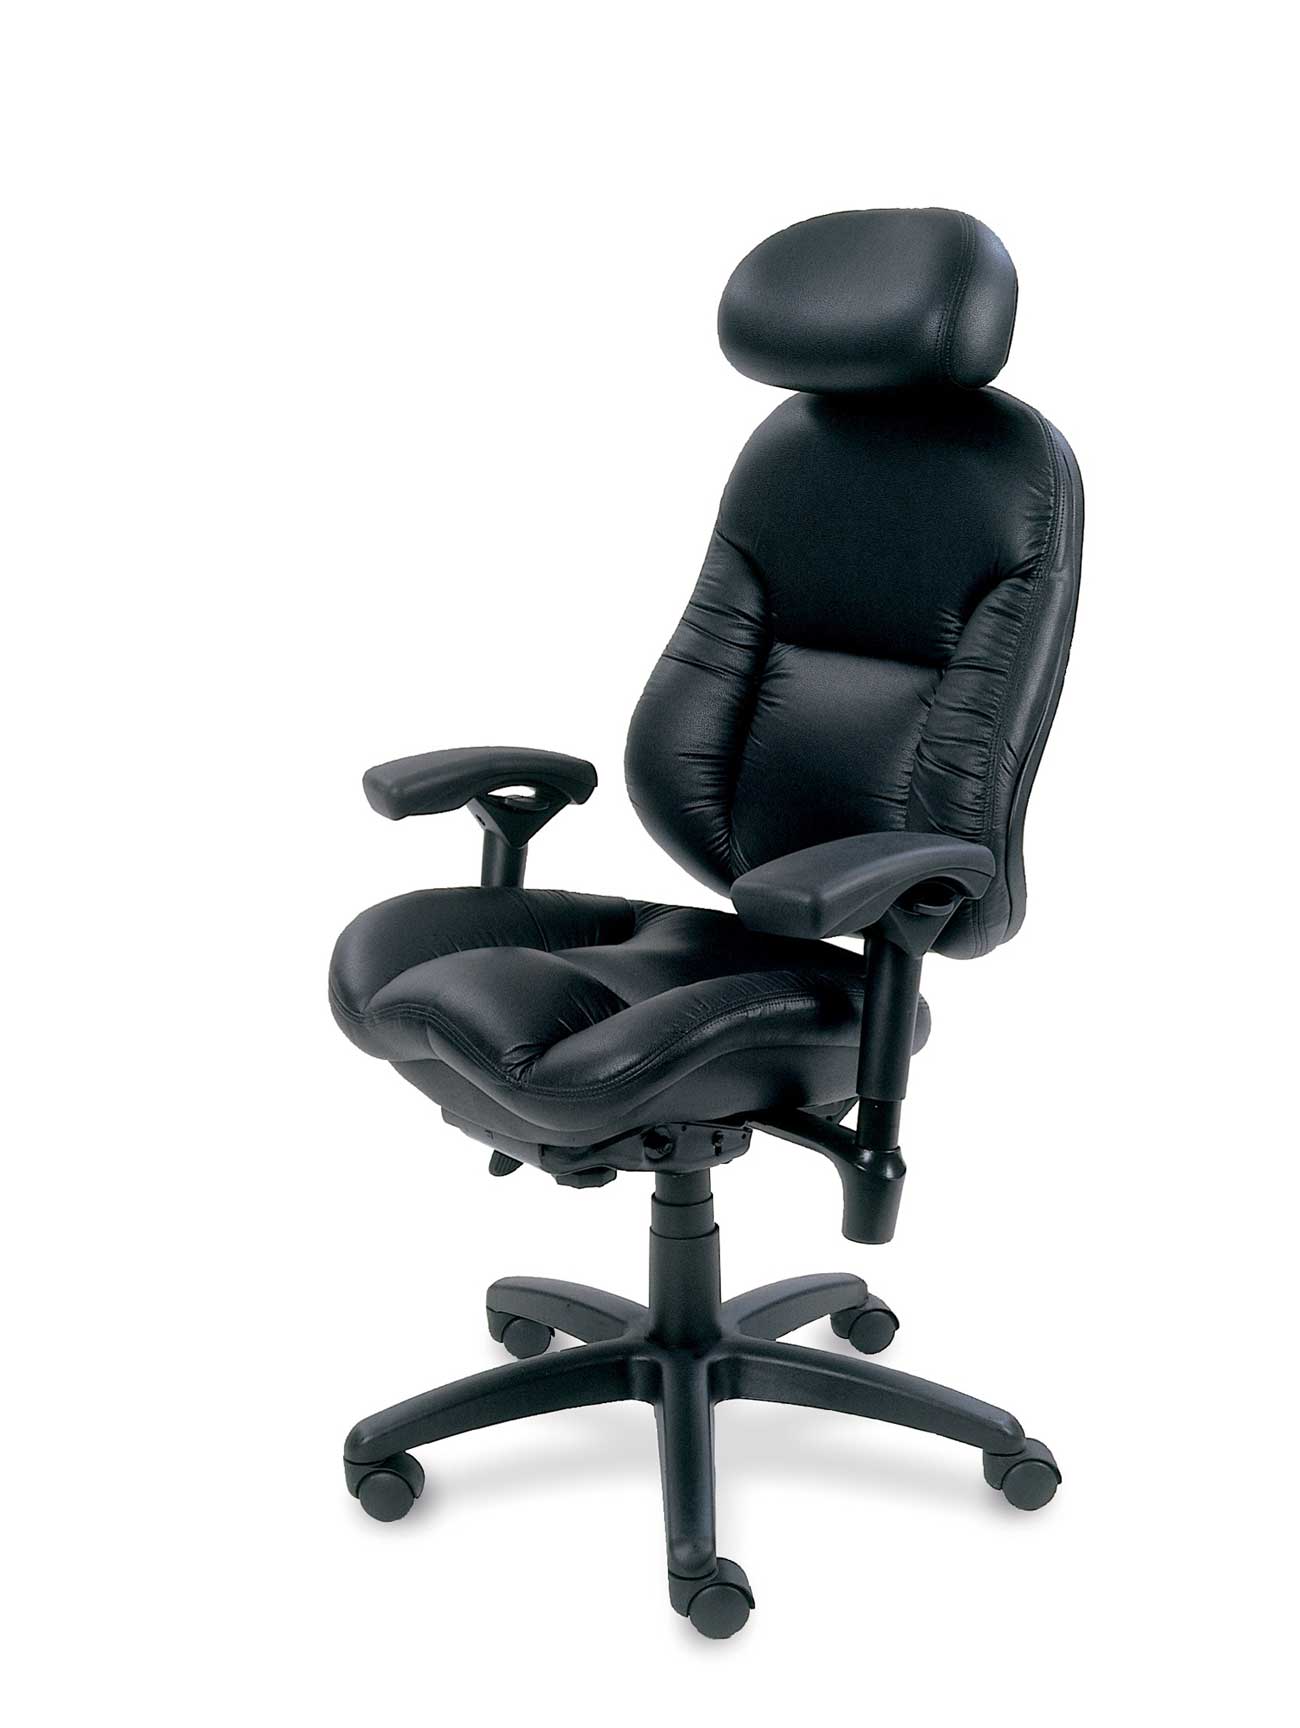 ergonomic desk chair ergonomic computer desk chair